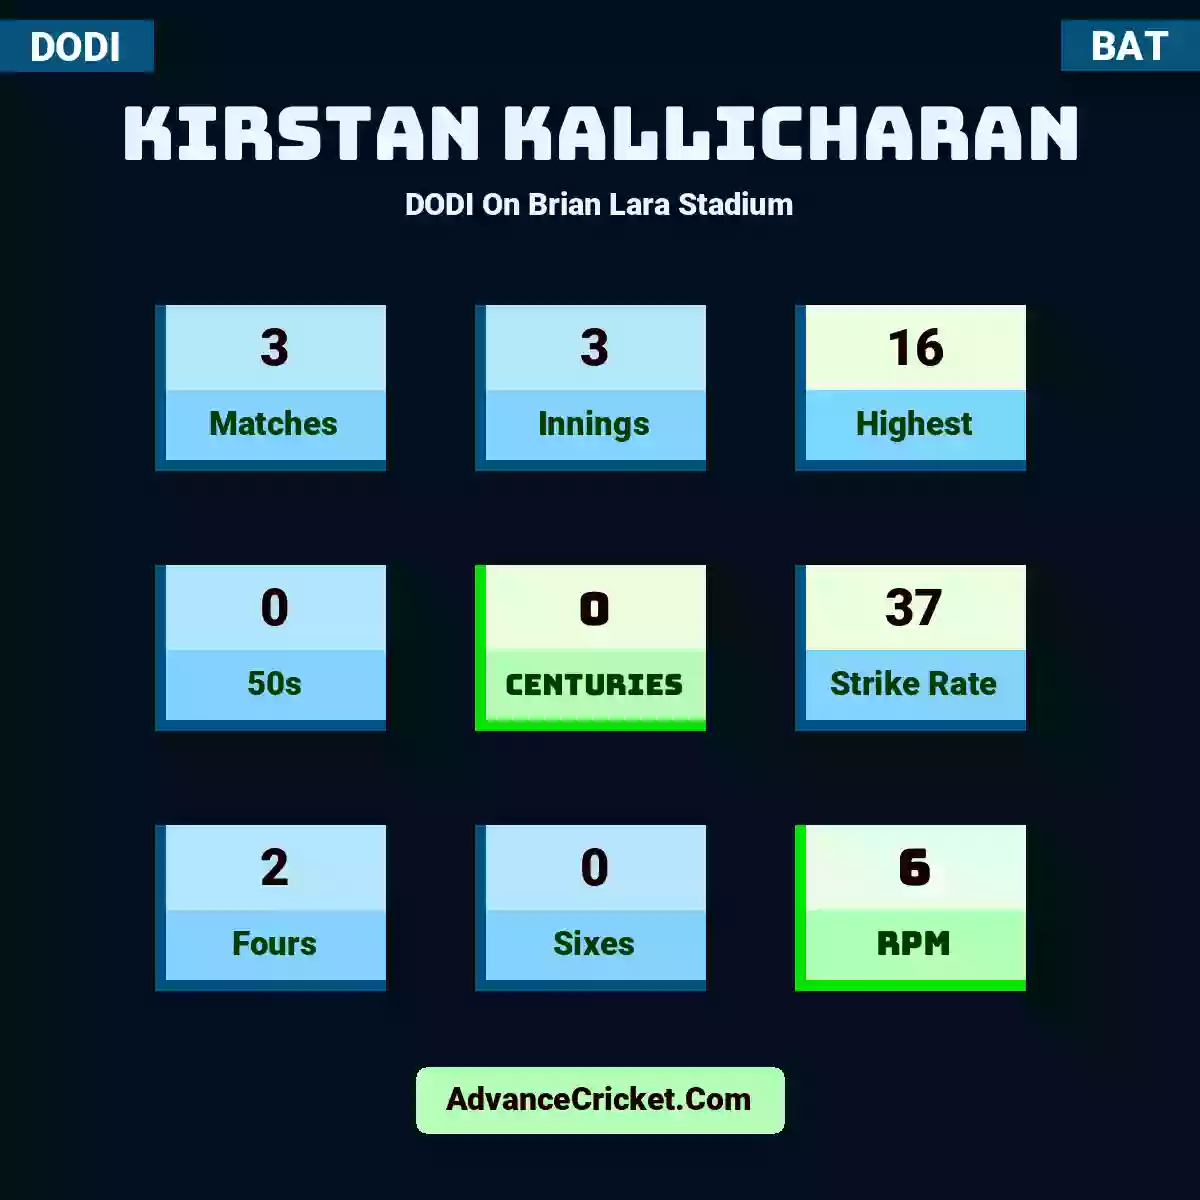 Kirstan Kallicharan DODI  On Brian Lara Stadium, Kirstan Kallicharan played 3 matches, scored 16 runs as highest, 0 half-centuries, and 0 centuries, with a strike rate of 37. K.Kallicharan hit 2 fours and 0 sixes, with an RPM of 6.